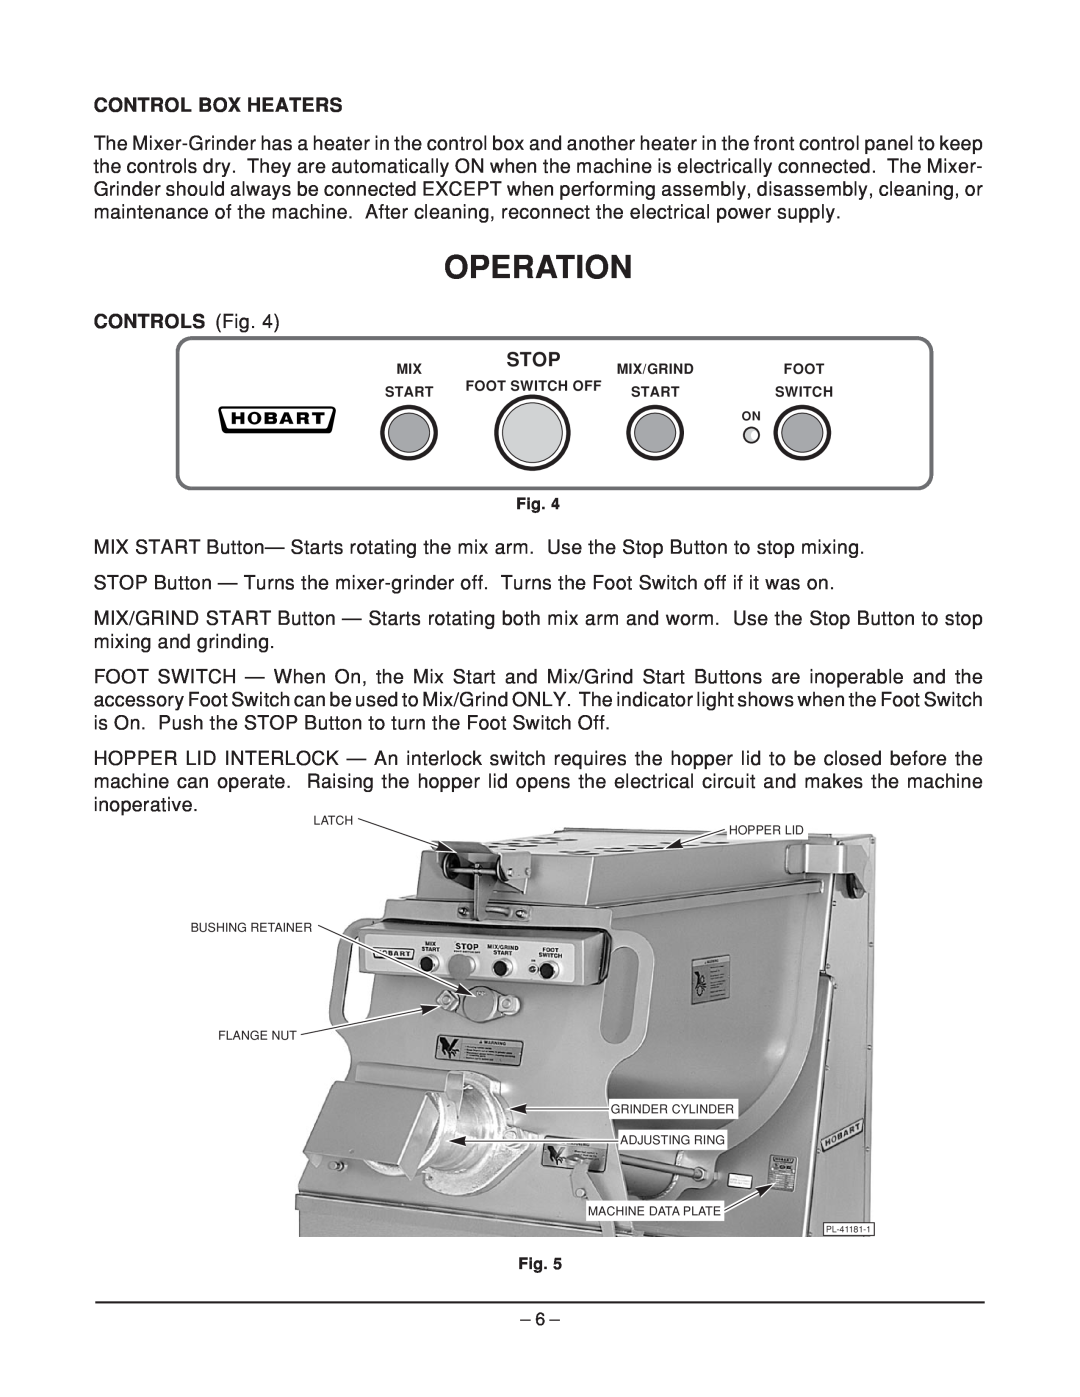 Hobart MG1532, MG2032 manual Operation, Control Box Heaters, CONTROLS Fig 